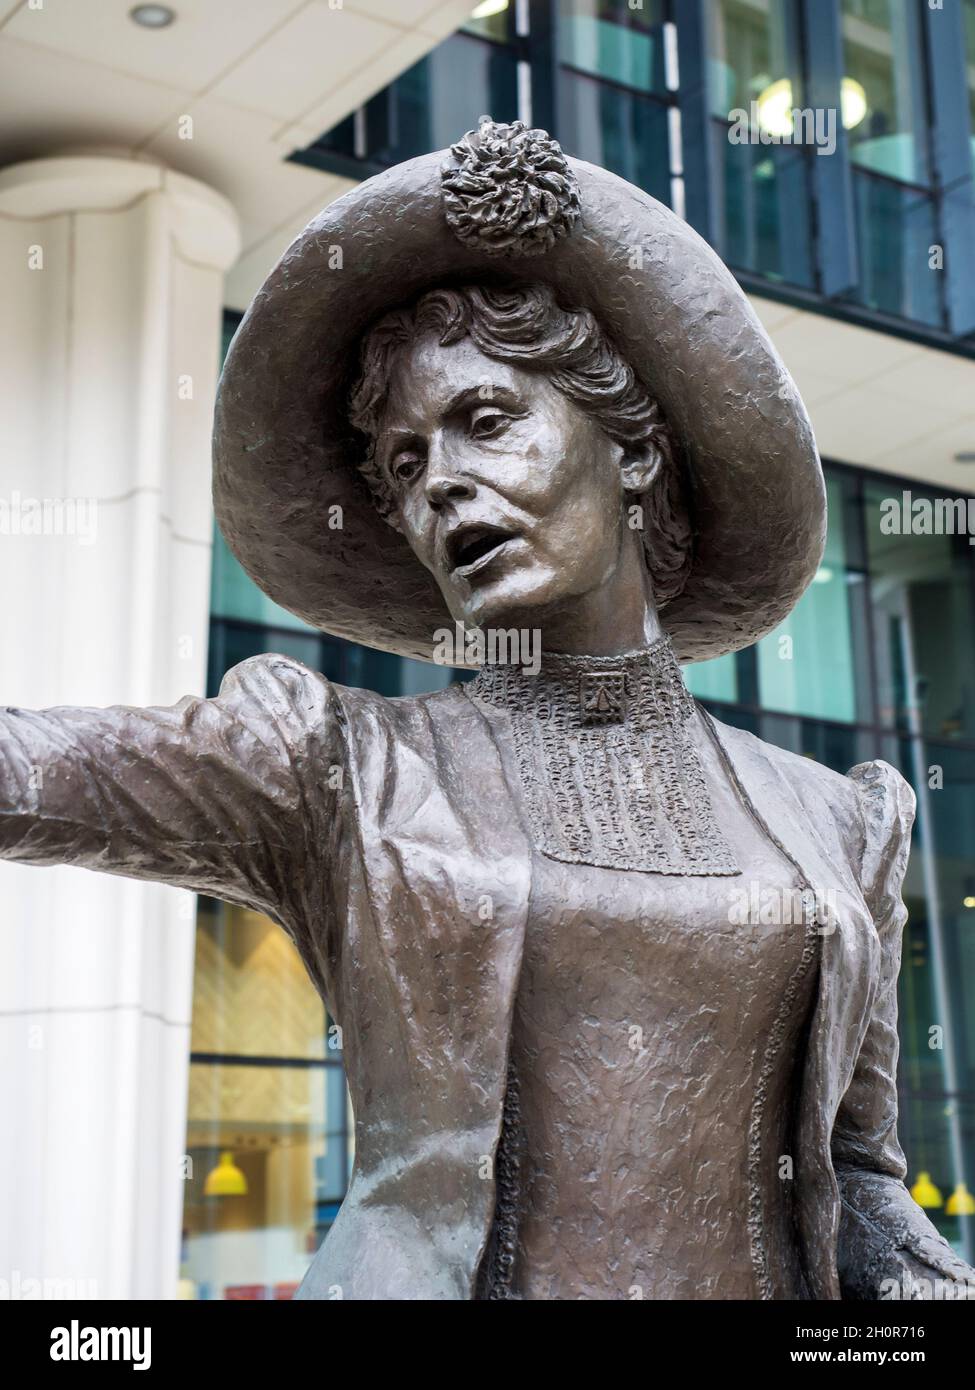 Rise Up femmes statue de suffragette Emmeline Pankhurst par Hazel Reeves dans St Peters Square Manchester Angleterre Banque D'Images